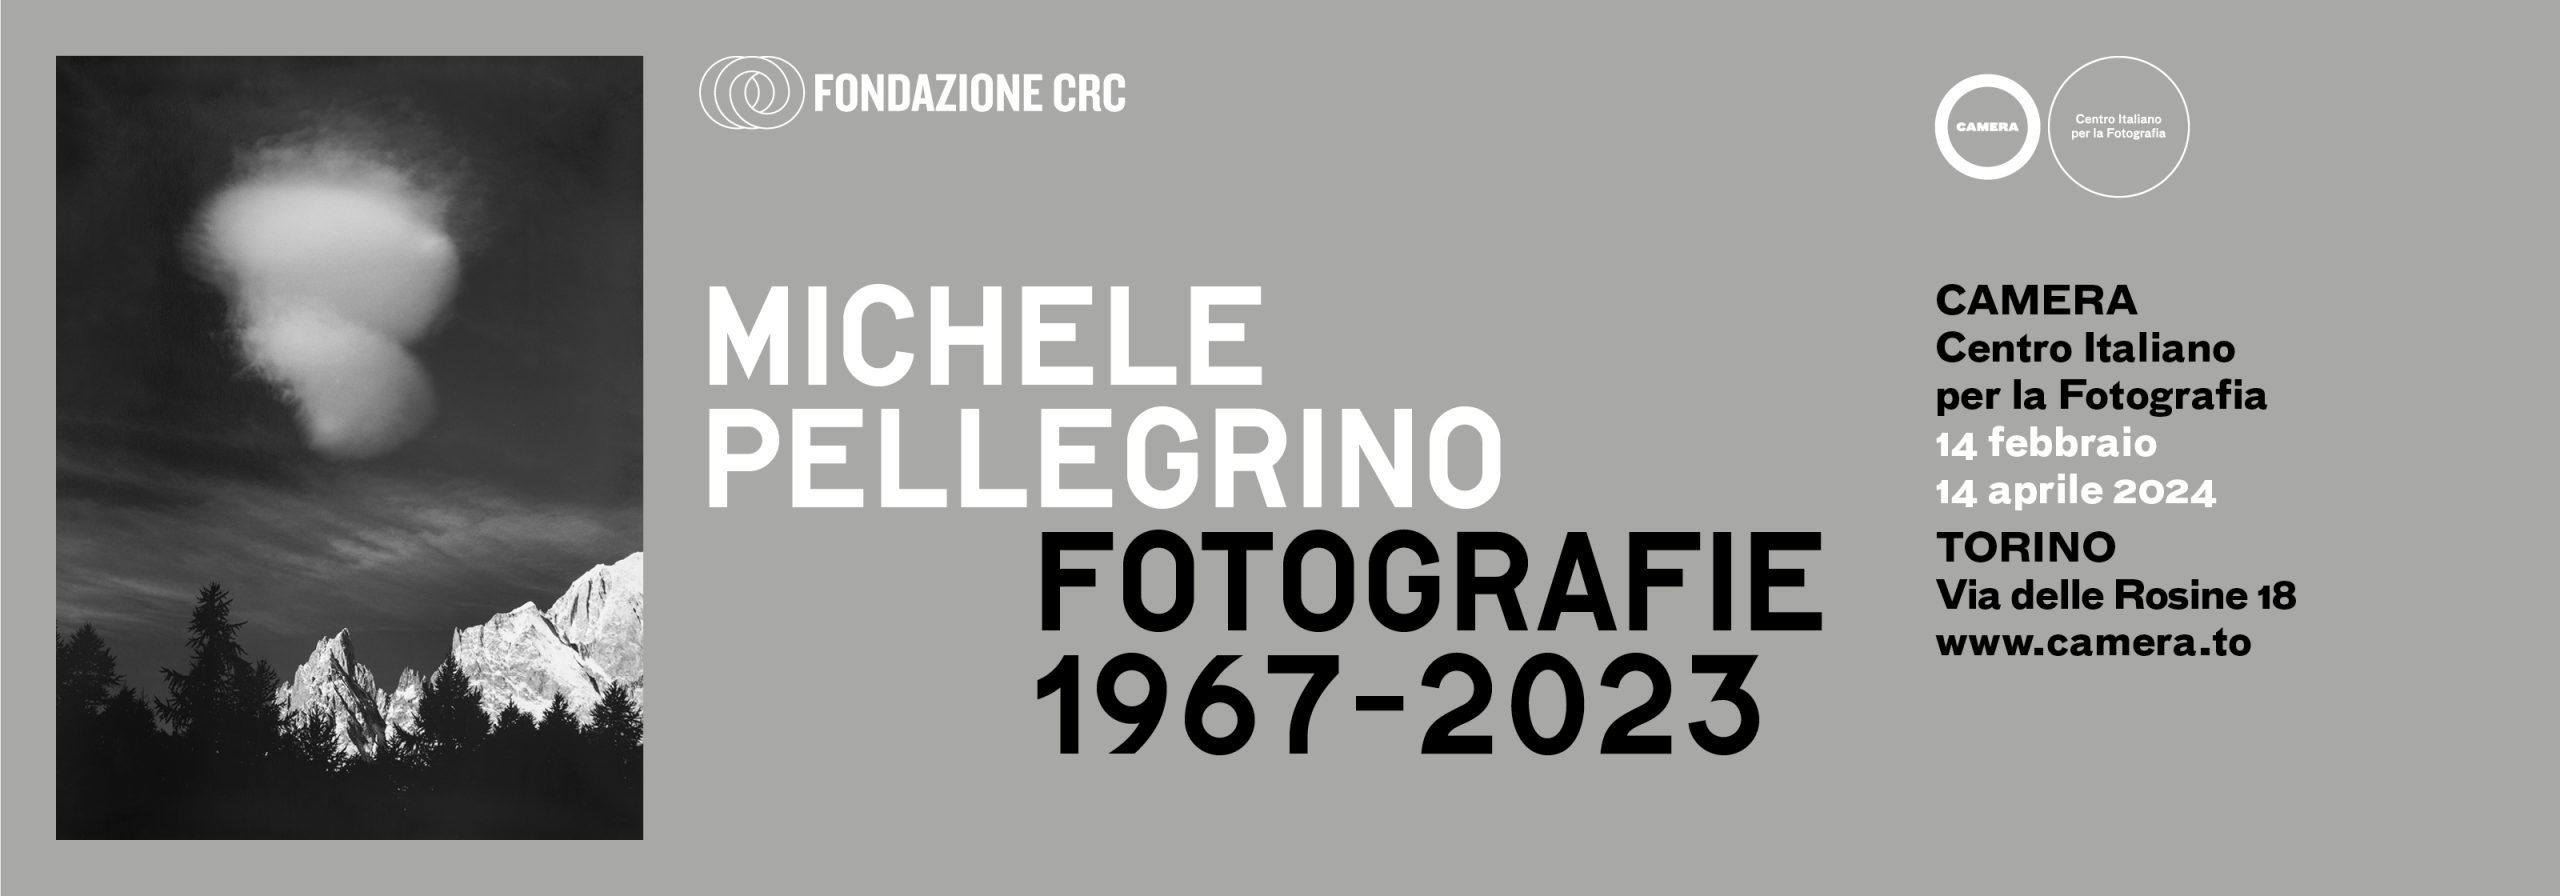 Michele Pellegrino. Fotografie 1967-2023